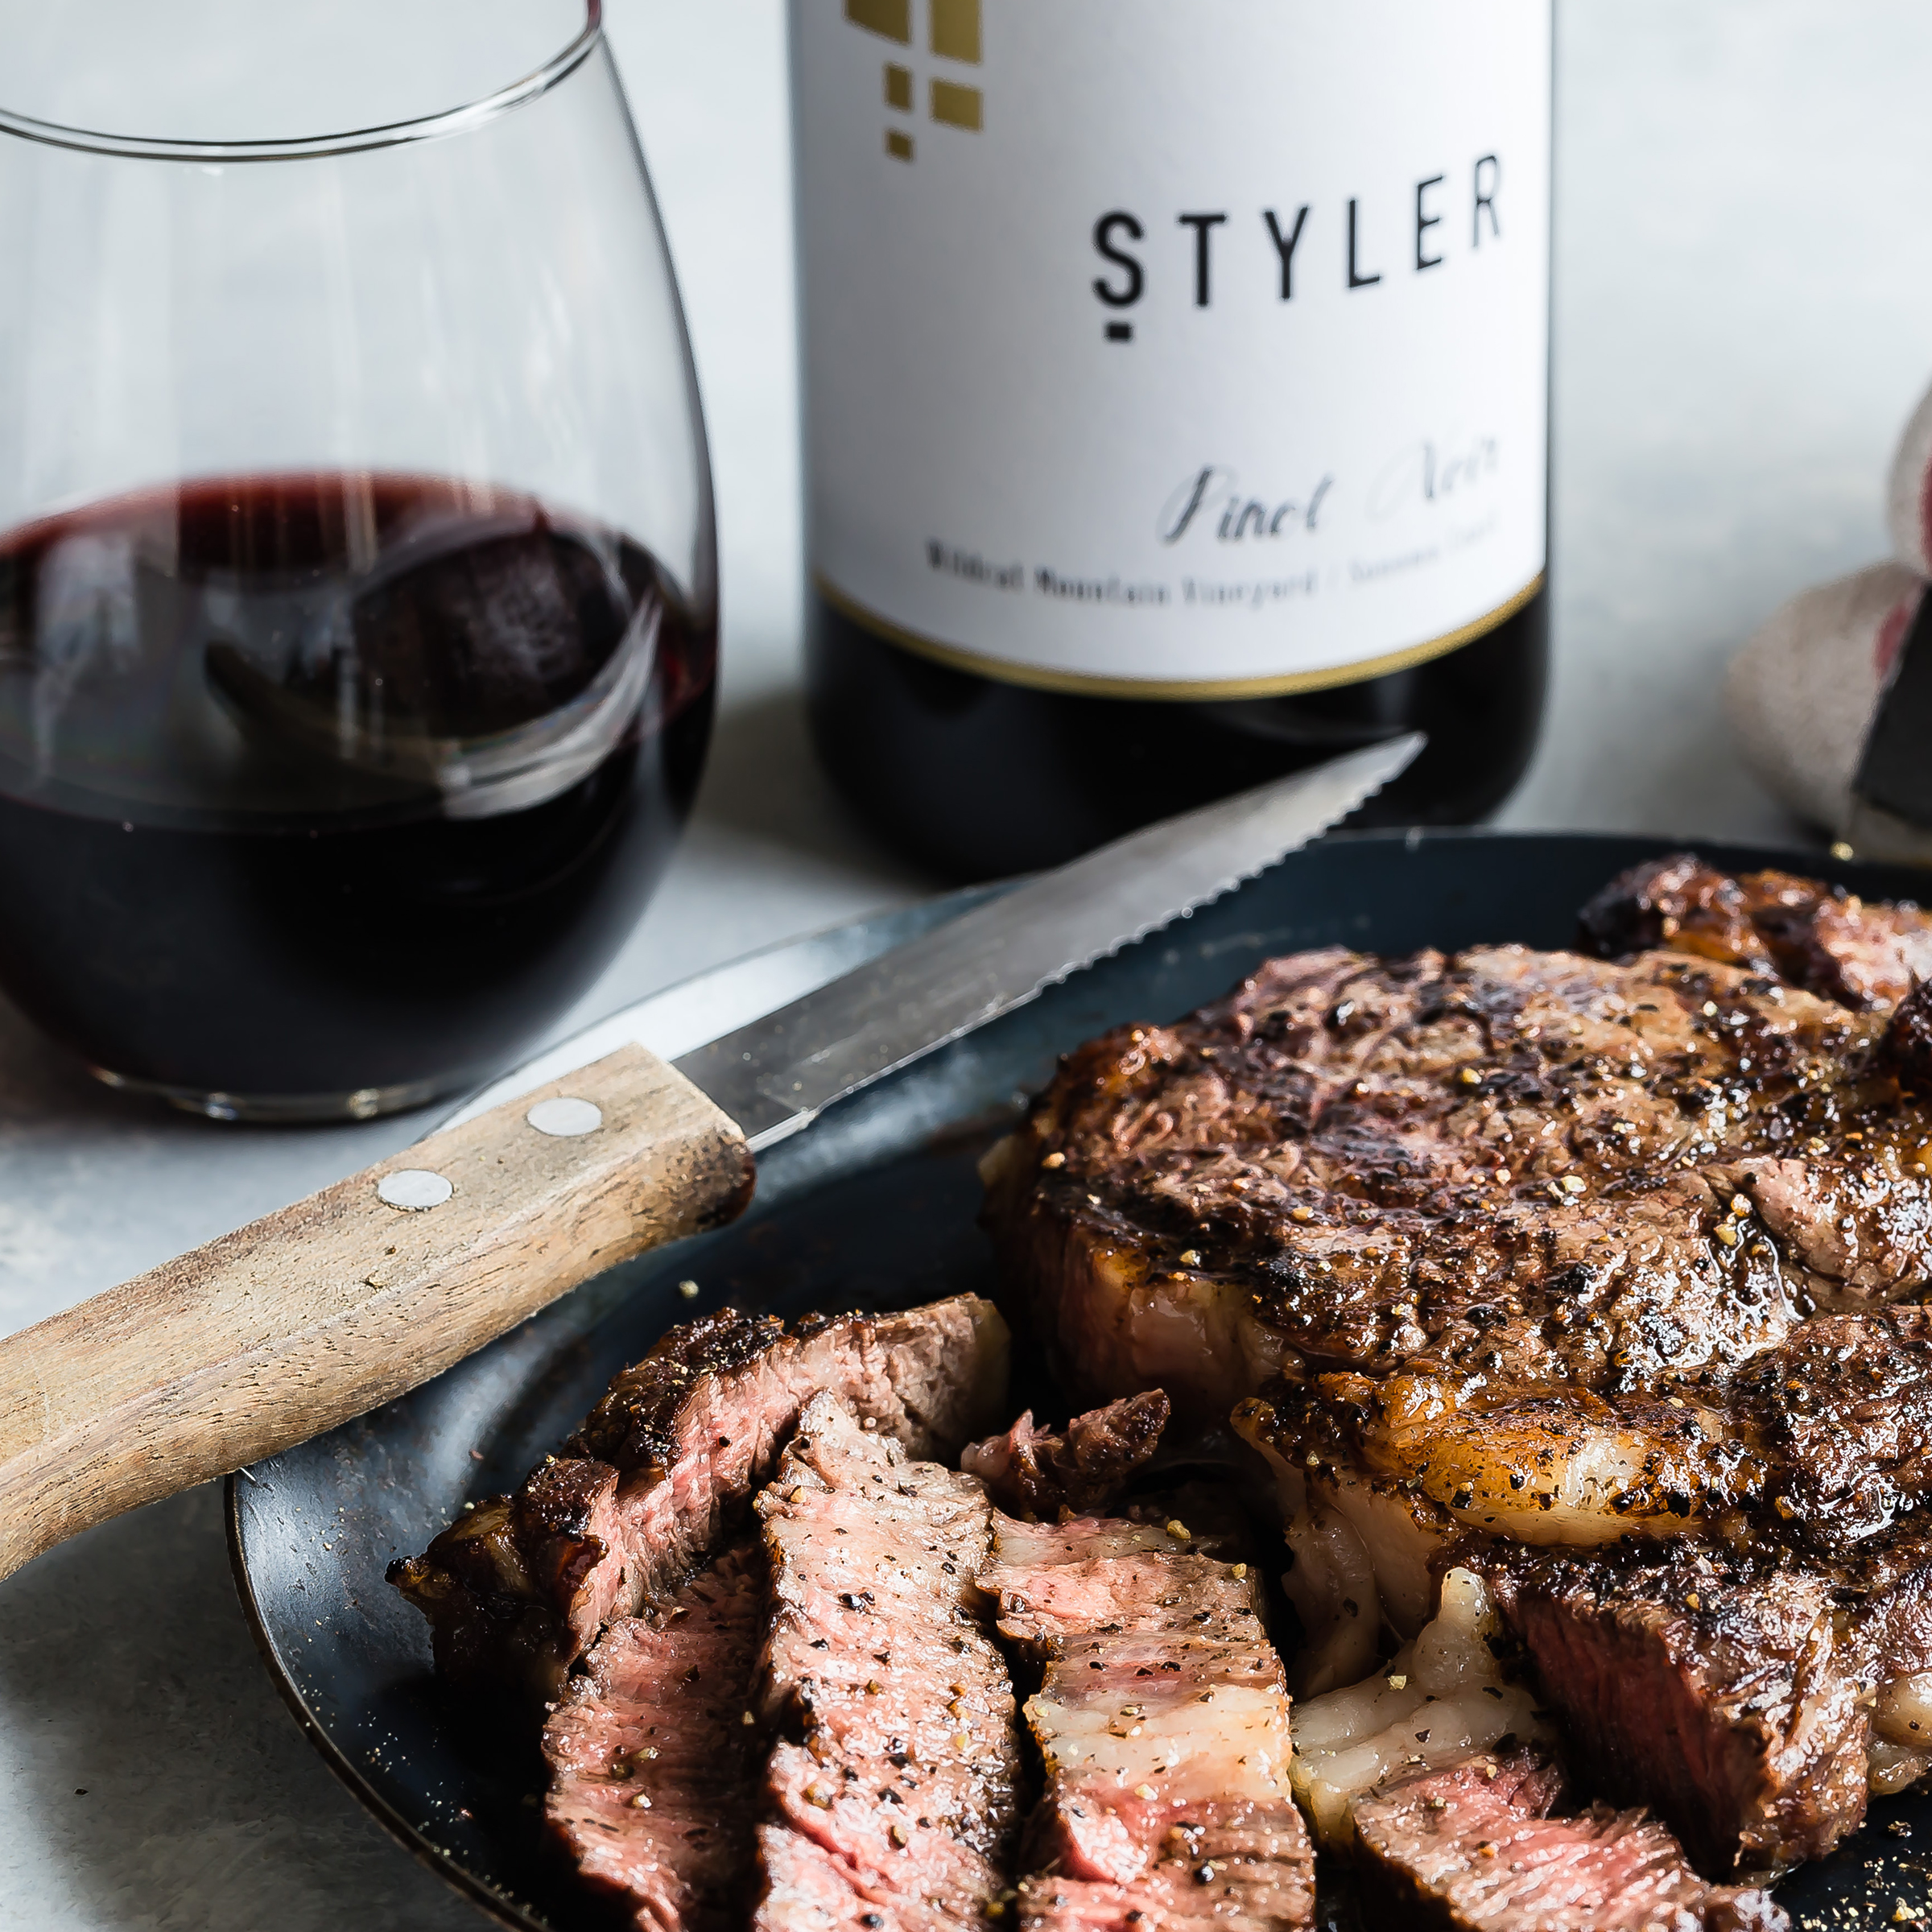 Styler Wines Pinot Noir with Steak